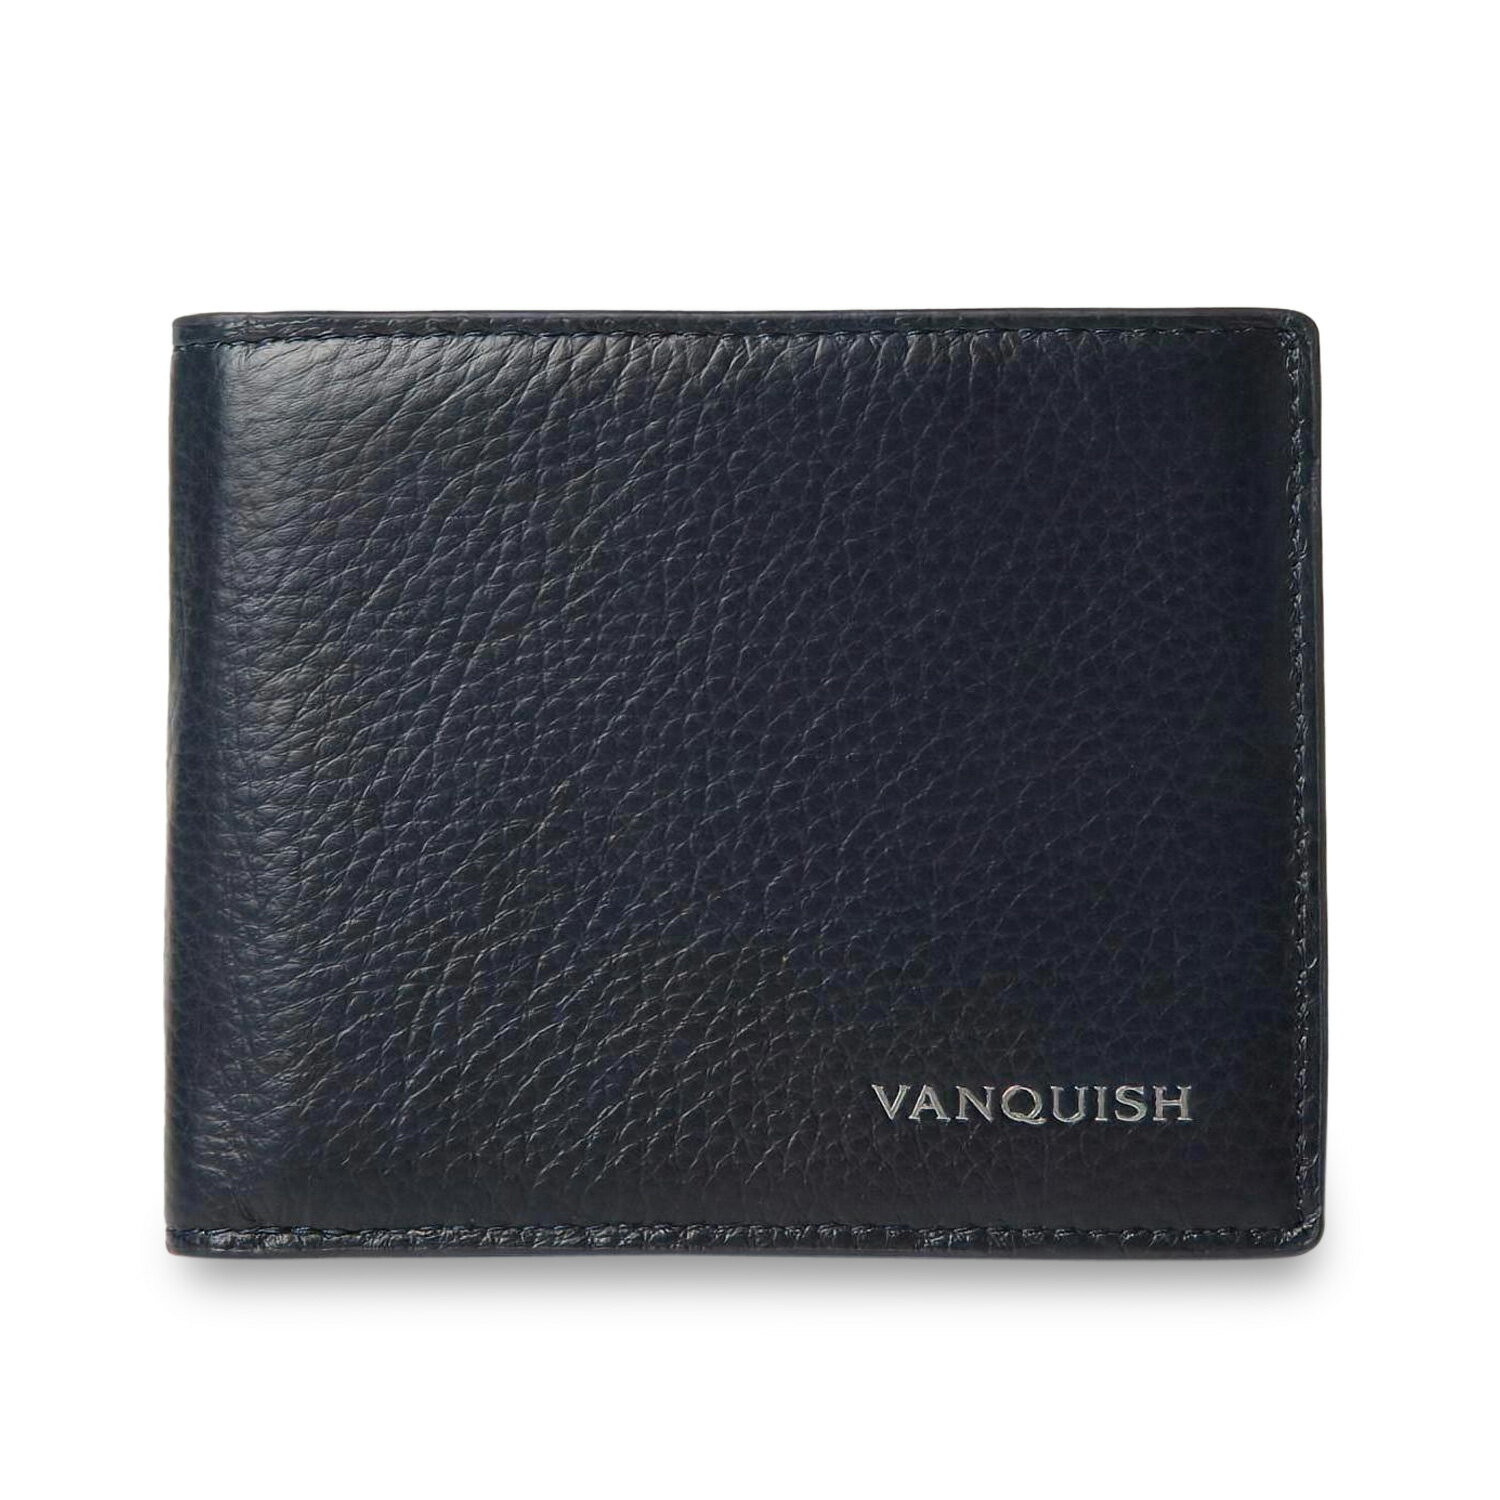 VANQUISH ヴァンキッシュ 二つ折り財布 メンズ 本革 ブラック ネイビー ダーク グリーン 黒 43520